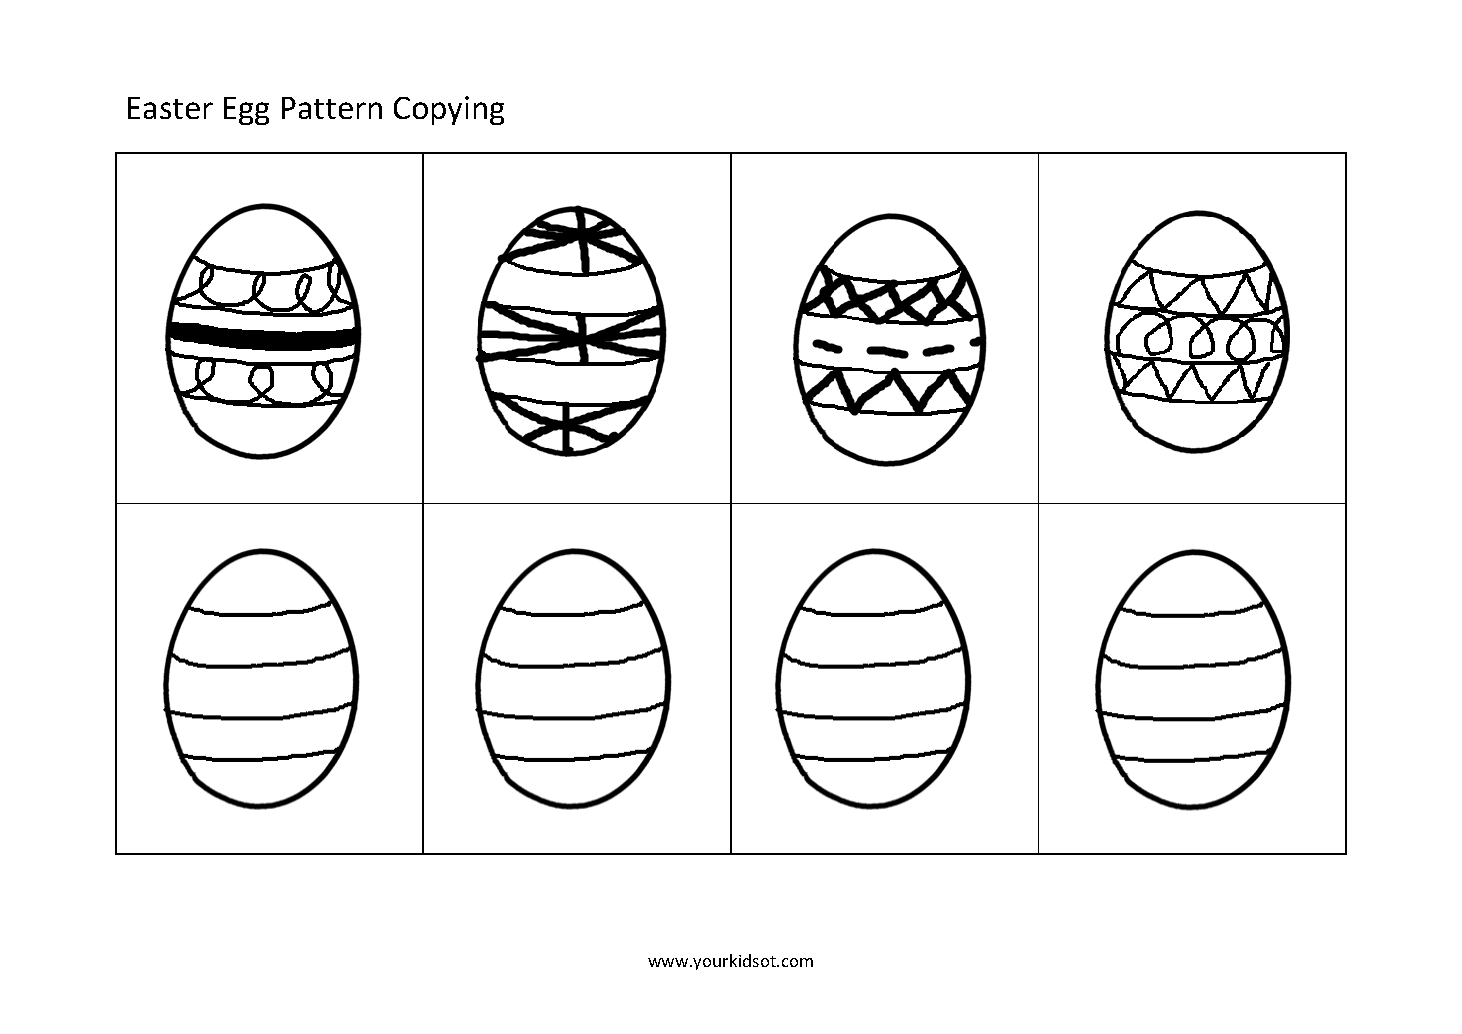 FREE Easter Egg Patterns